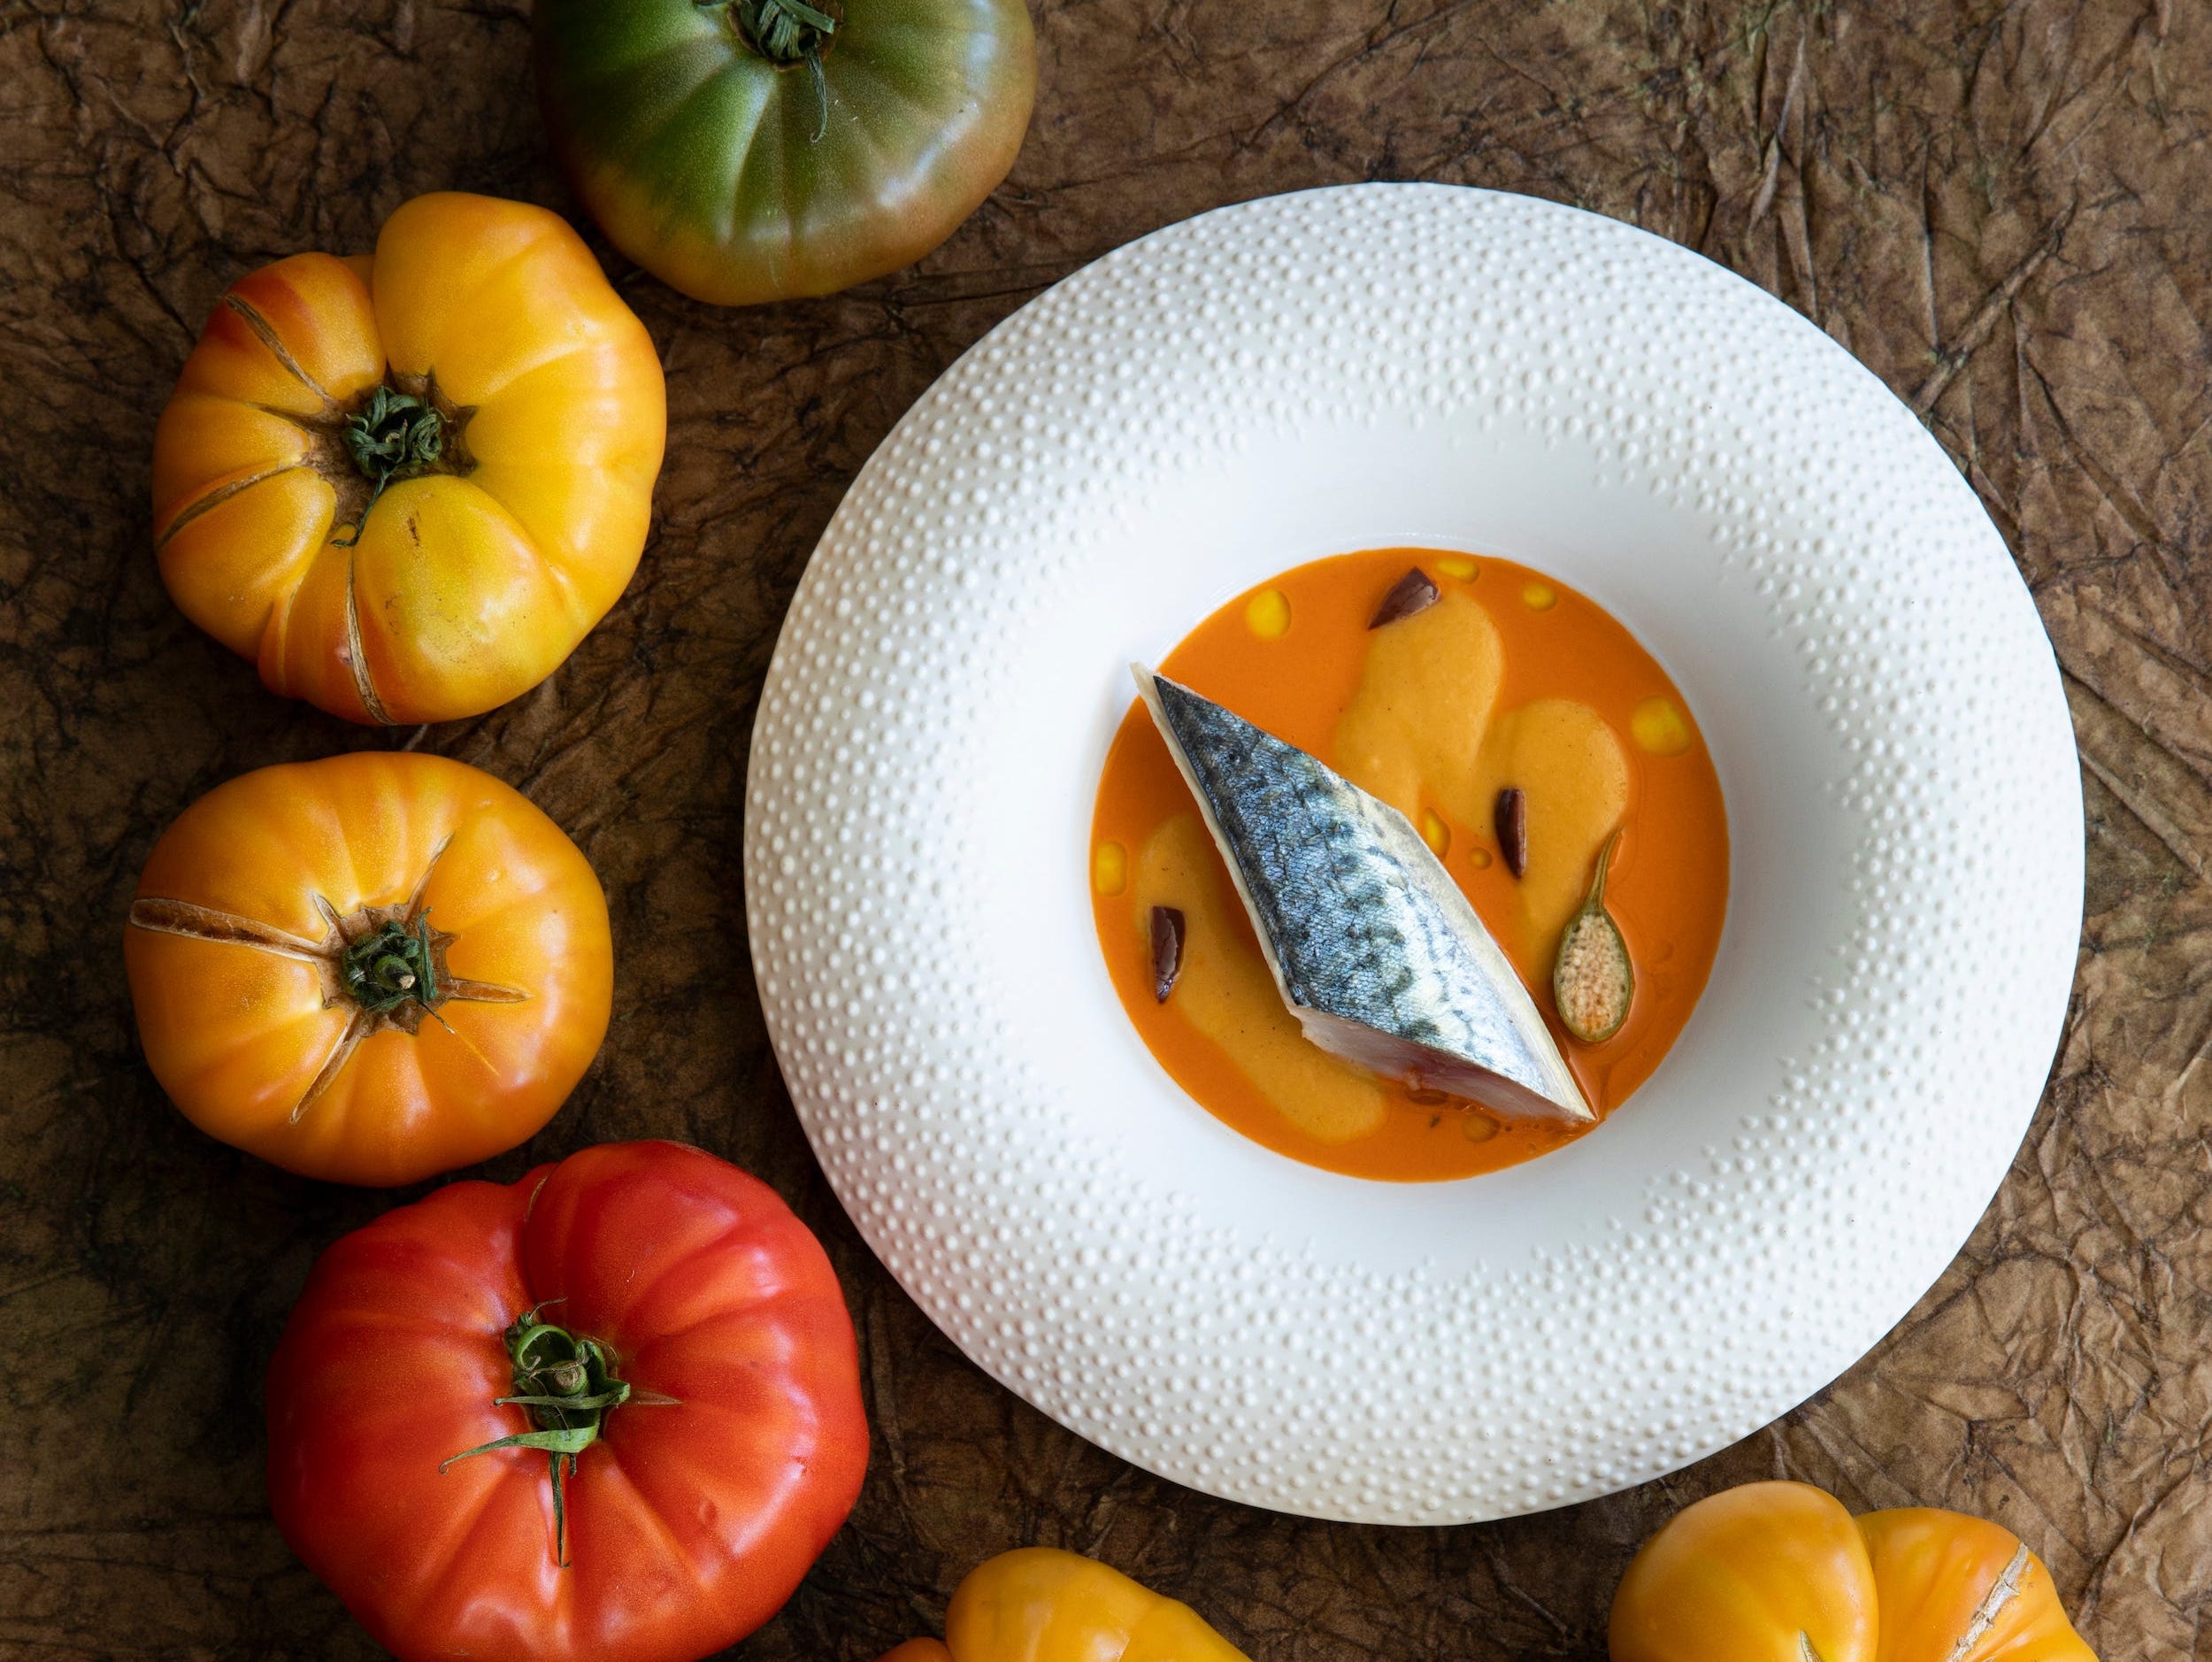 Mirazur Tomatoes and fish on fruit days (credit Matteo Carassale)